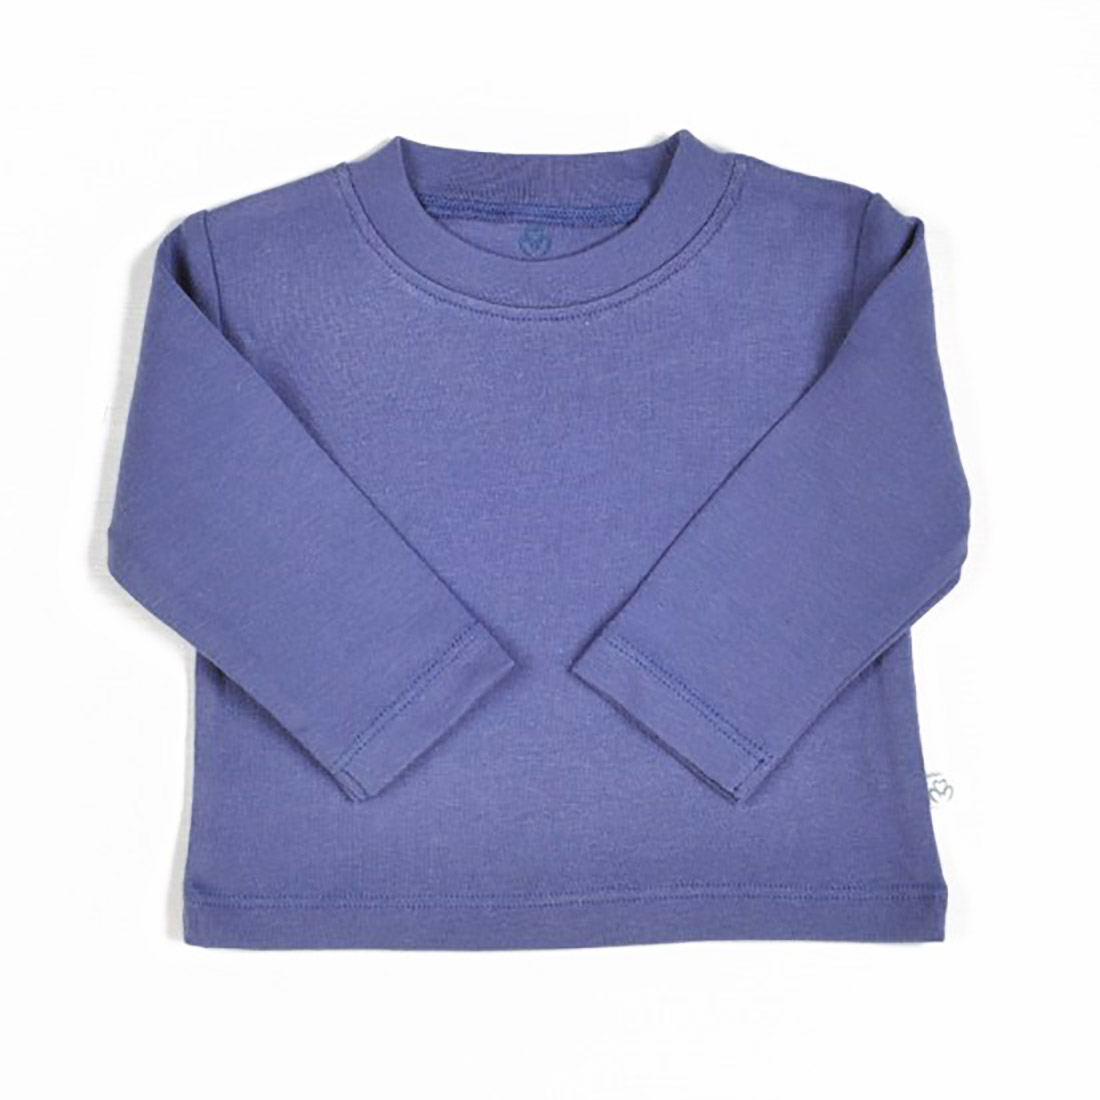 OrganicEra Organic Sweatshirt, Dark Blue